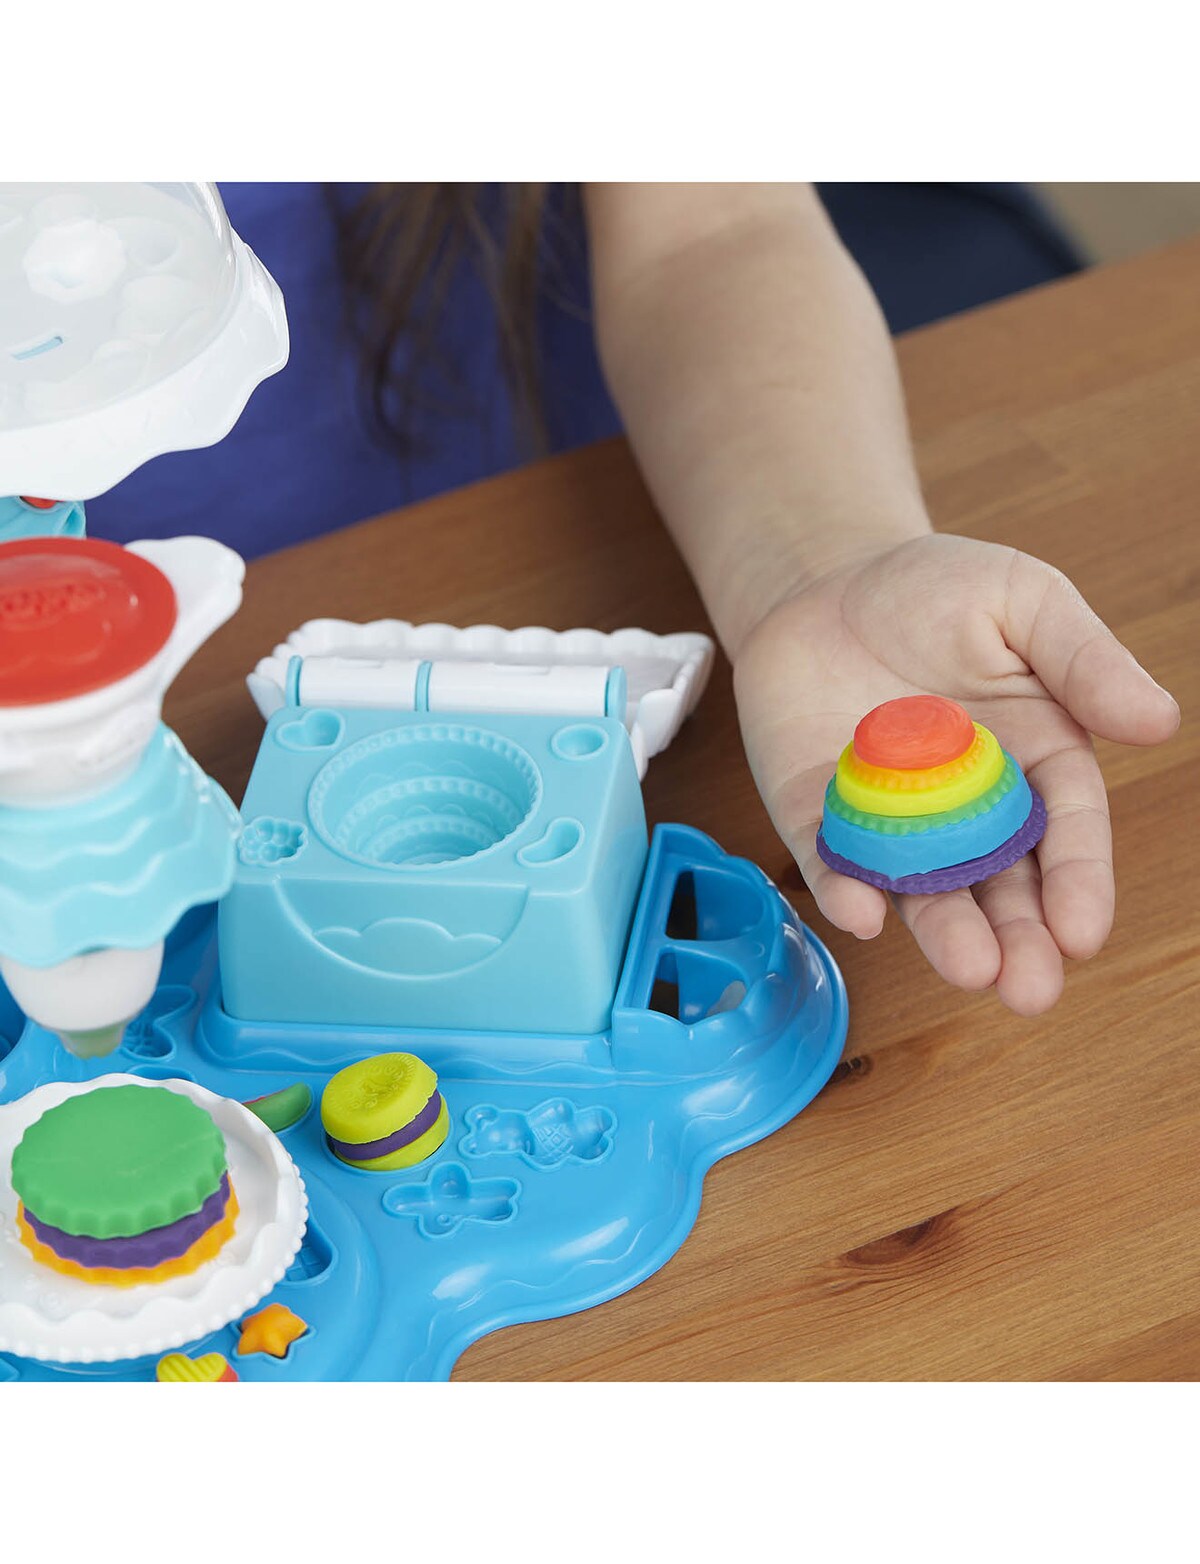 Play Doh Cake | Play Doh Rainbow Cake With Playdough | PlayDoh Food -  Instructables